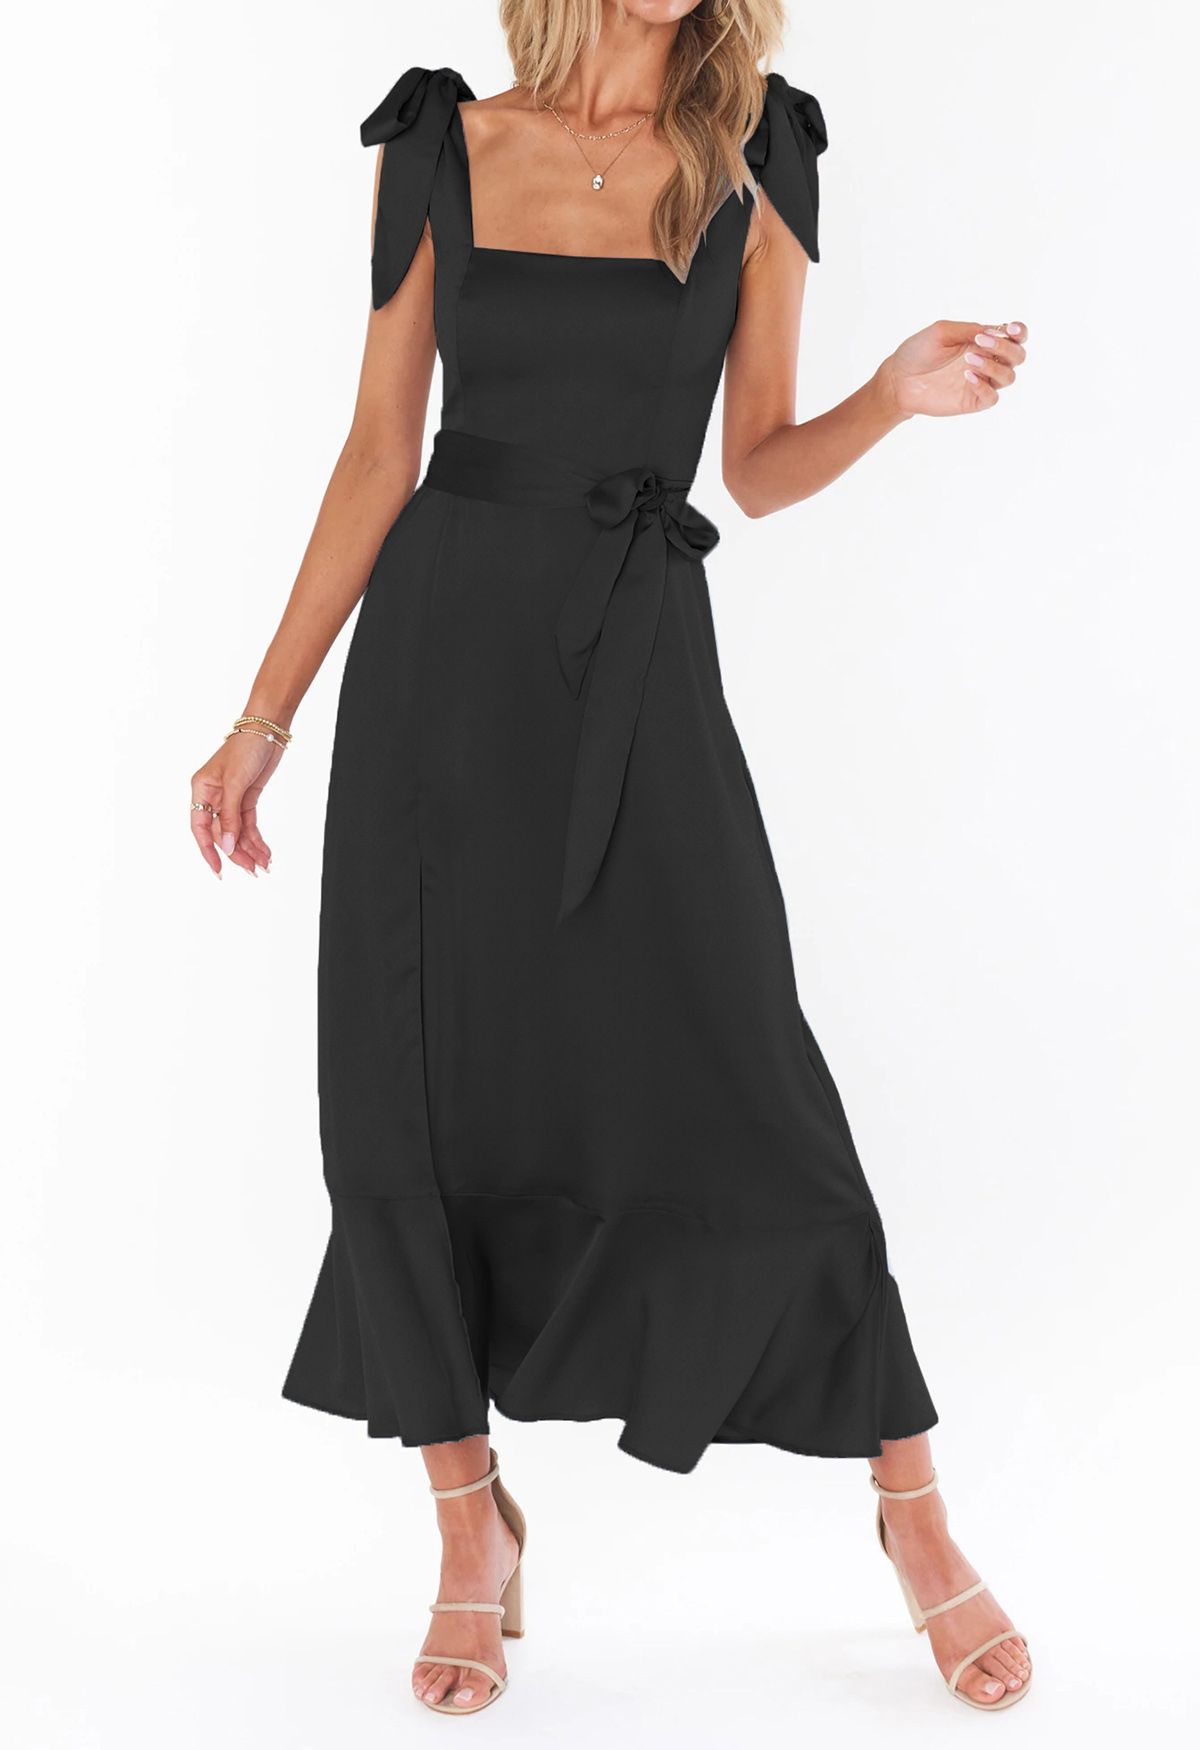 Ruffle Hem Tie-Shoulder Cami Dress in Black